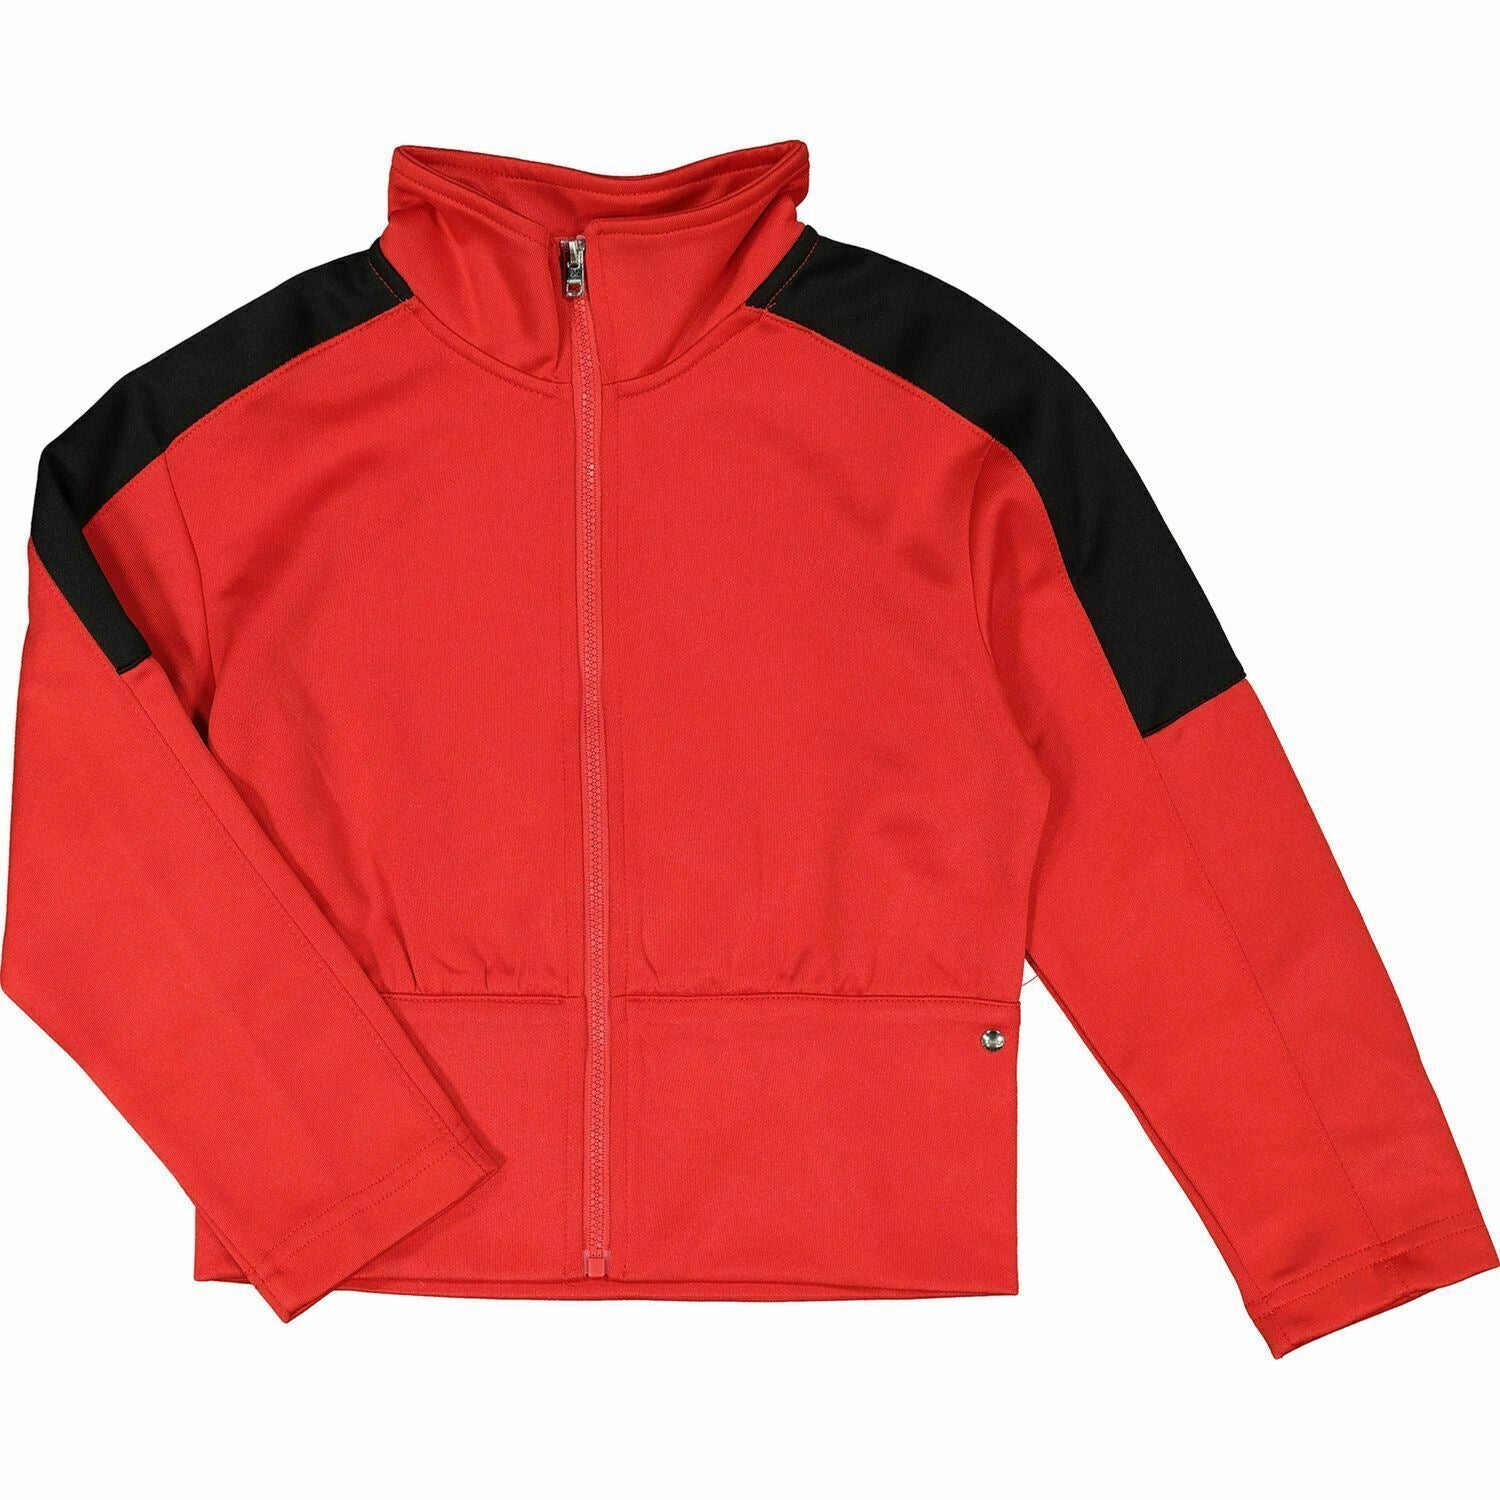 DIESEL Girls' Kids' Zip Up Funnel Neck Track Jacket, Red/Black, size 8 years